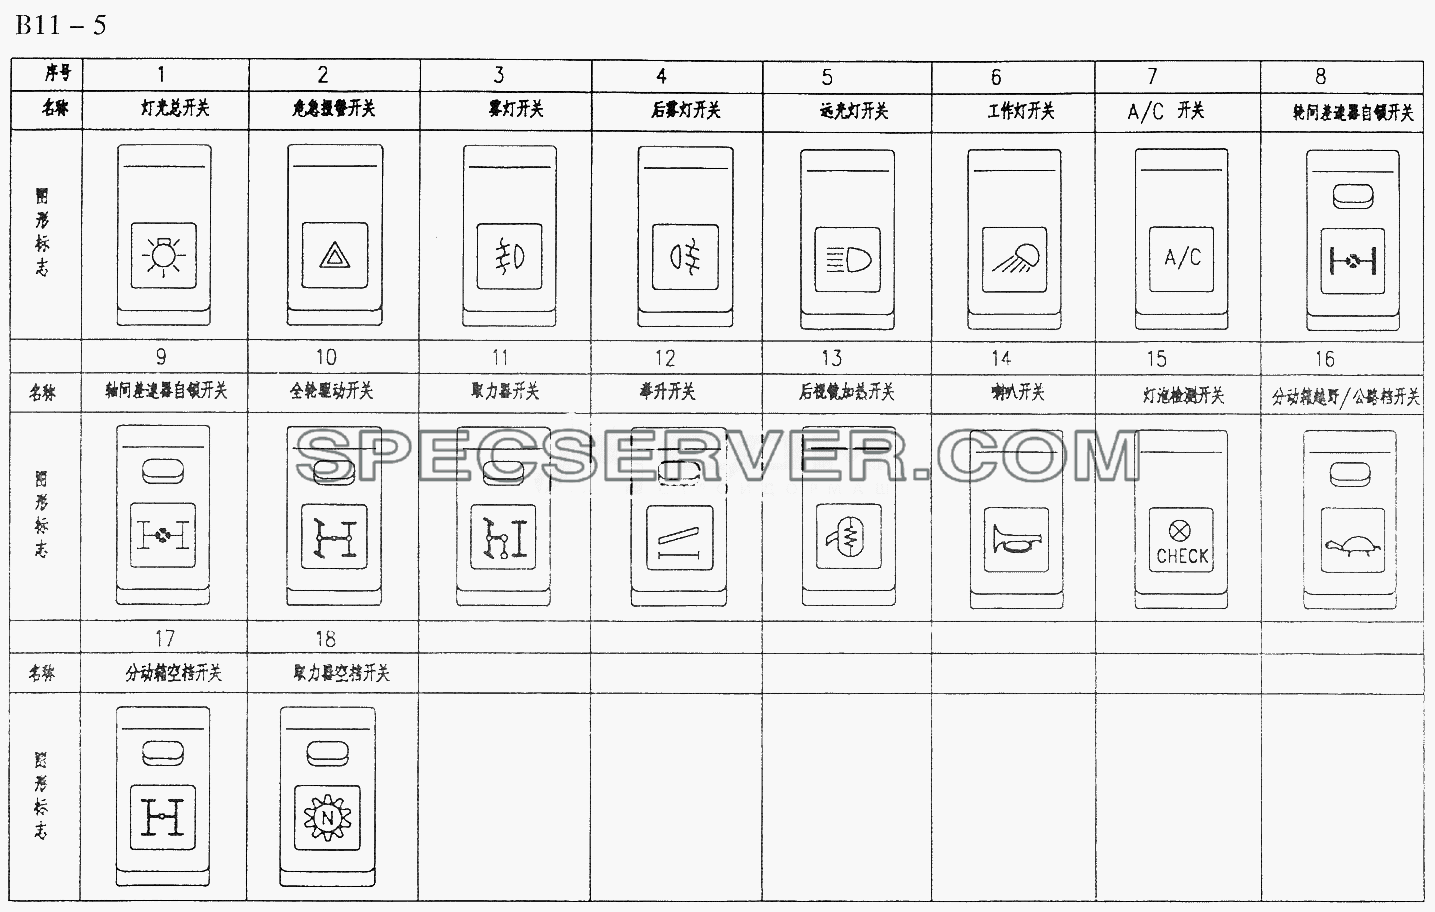 SWITCHS FOR CENTRAL CONTROL ELECTRICAL SYSTEM (B11-5) для Sinotruk 6x6 Tipper (336) (список запасных частей)